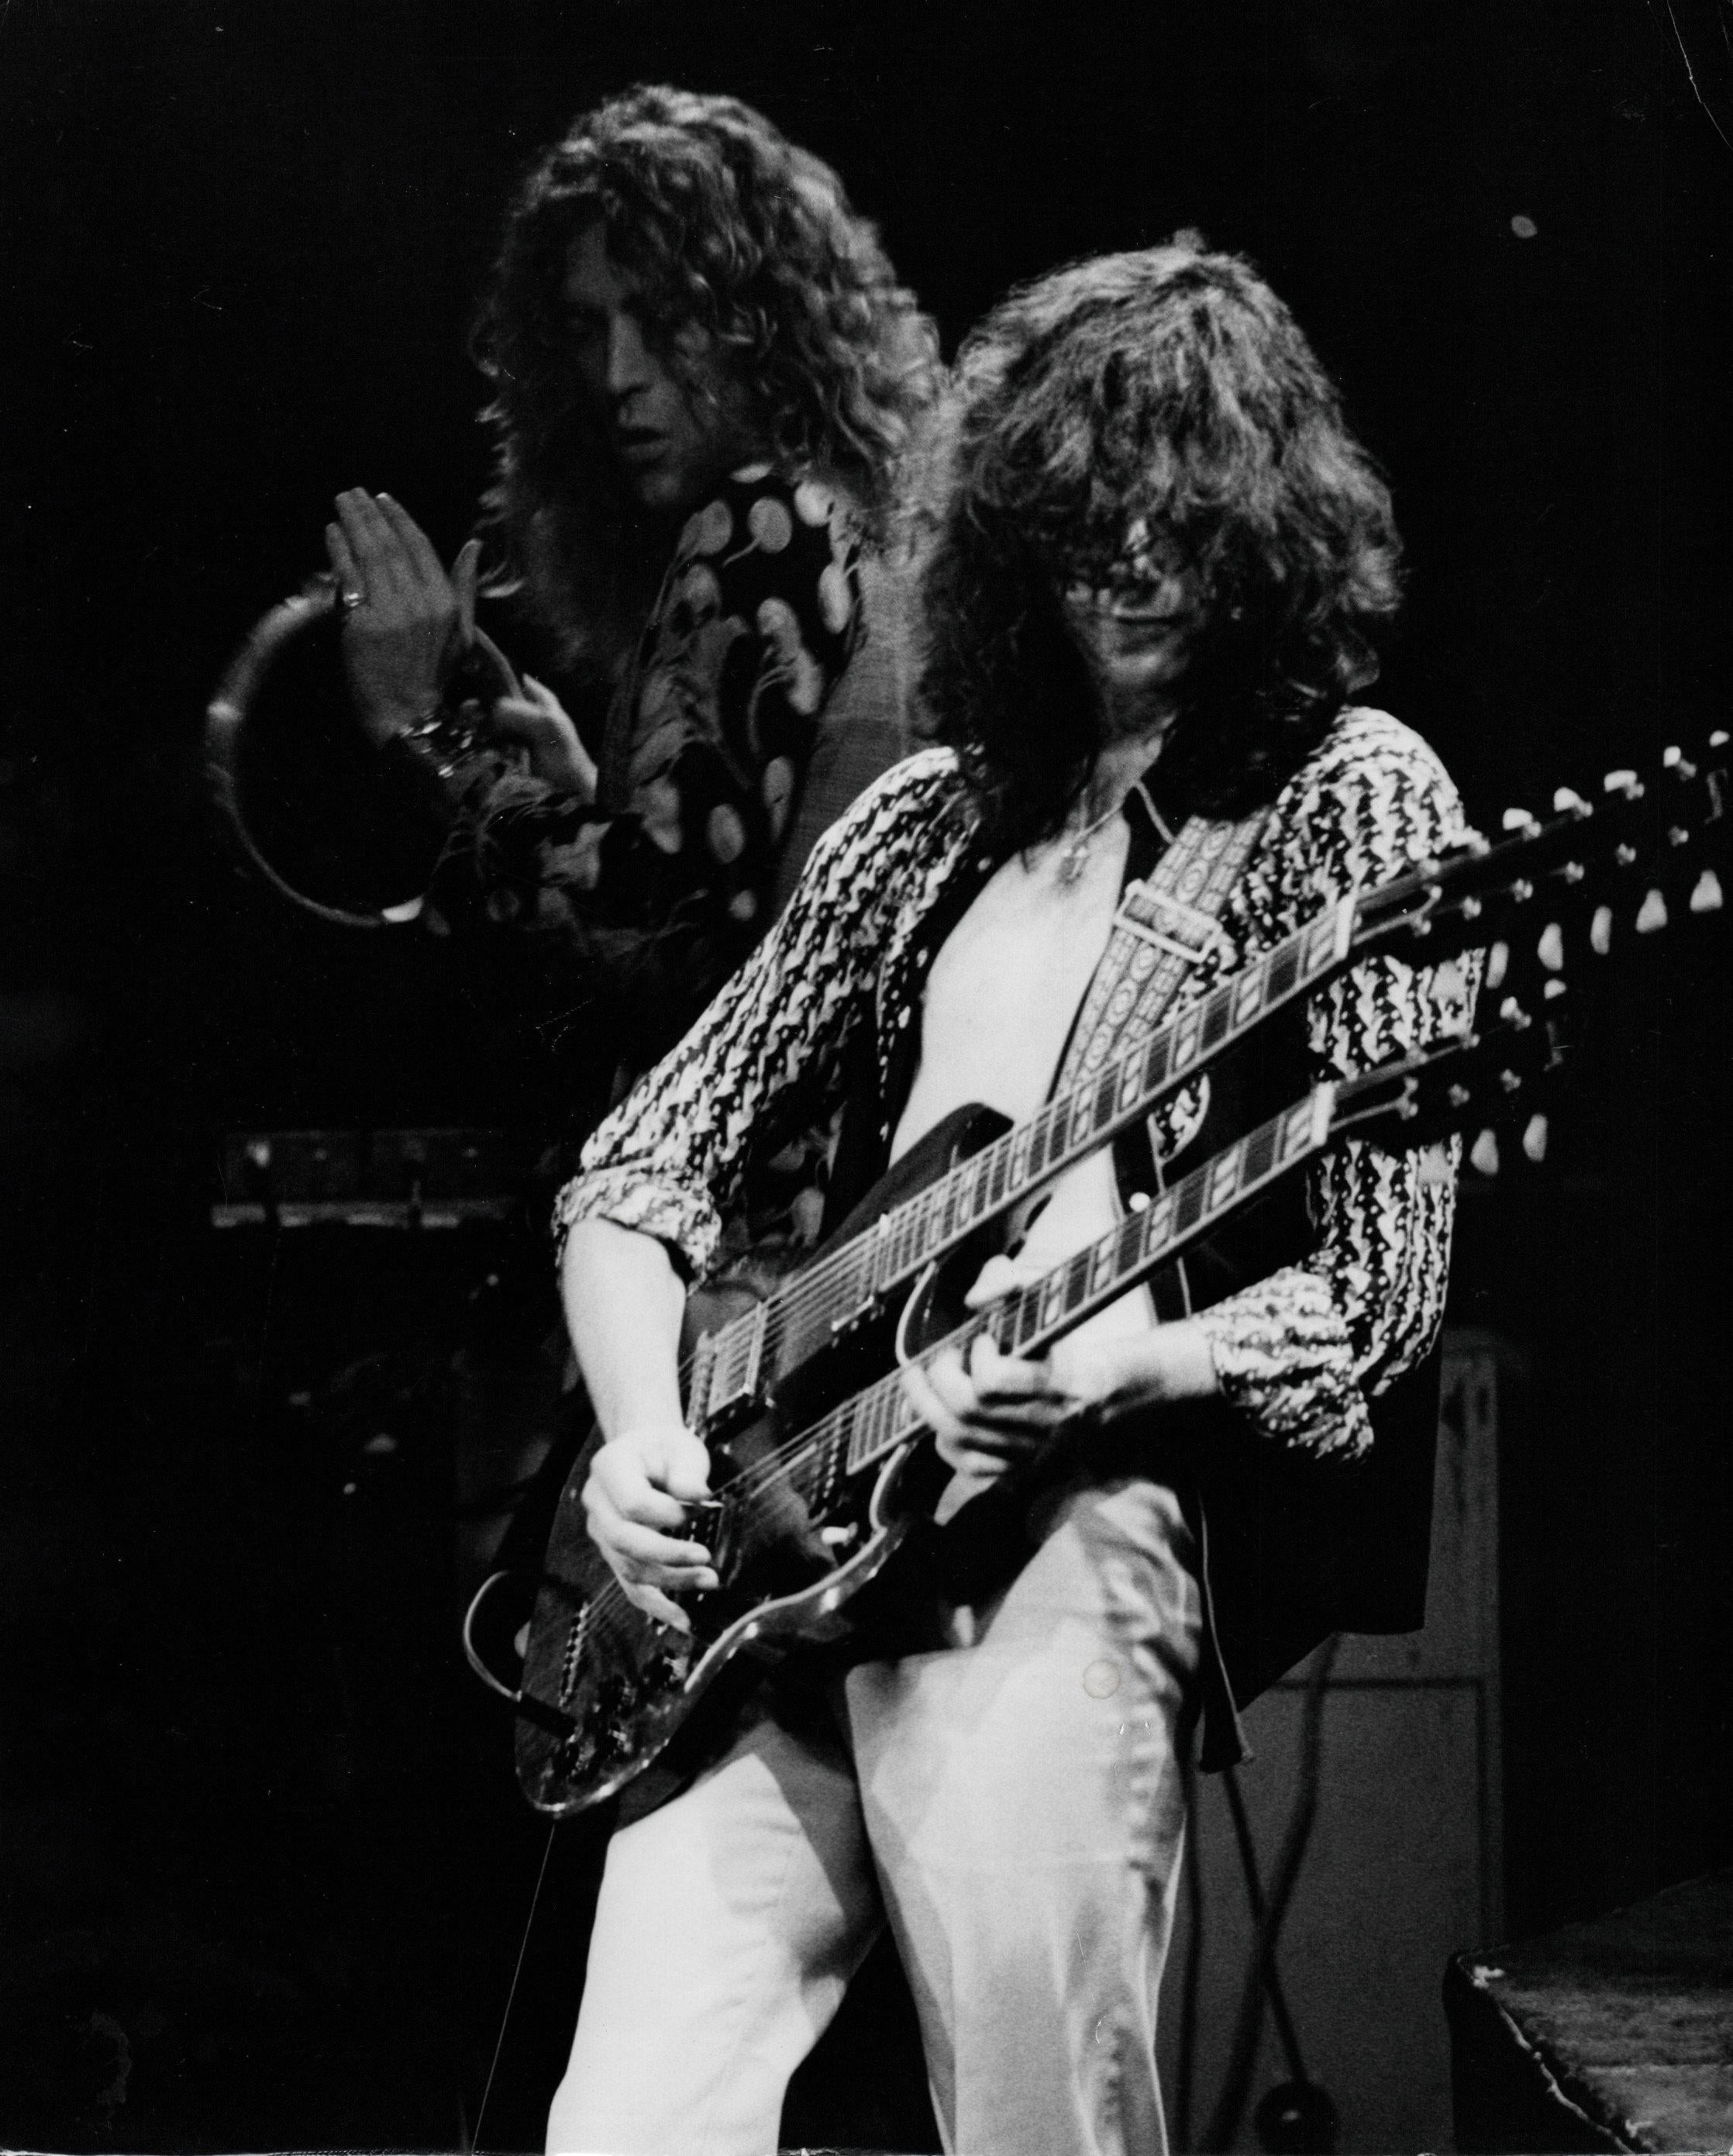 Peter Simon Portrait Photograph - Jimmy Page of Led Zeppelin Playing Double Guitar Vintage Original Photograph